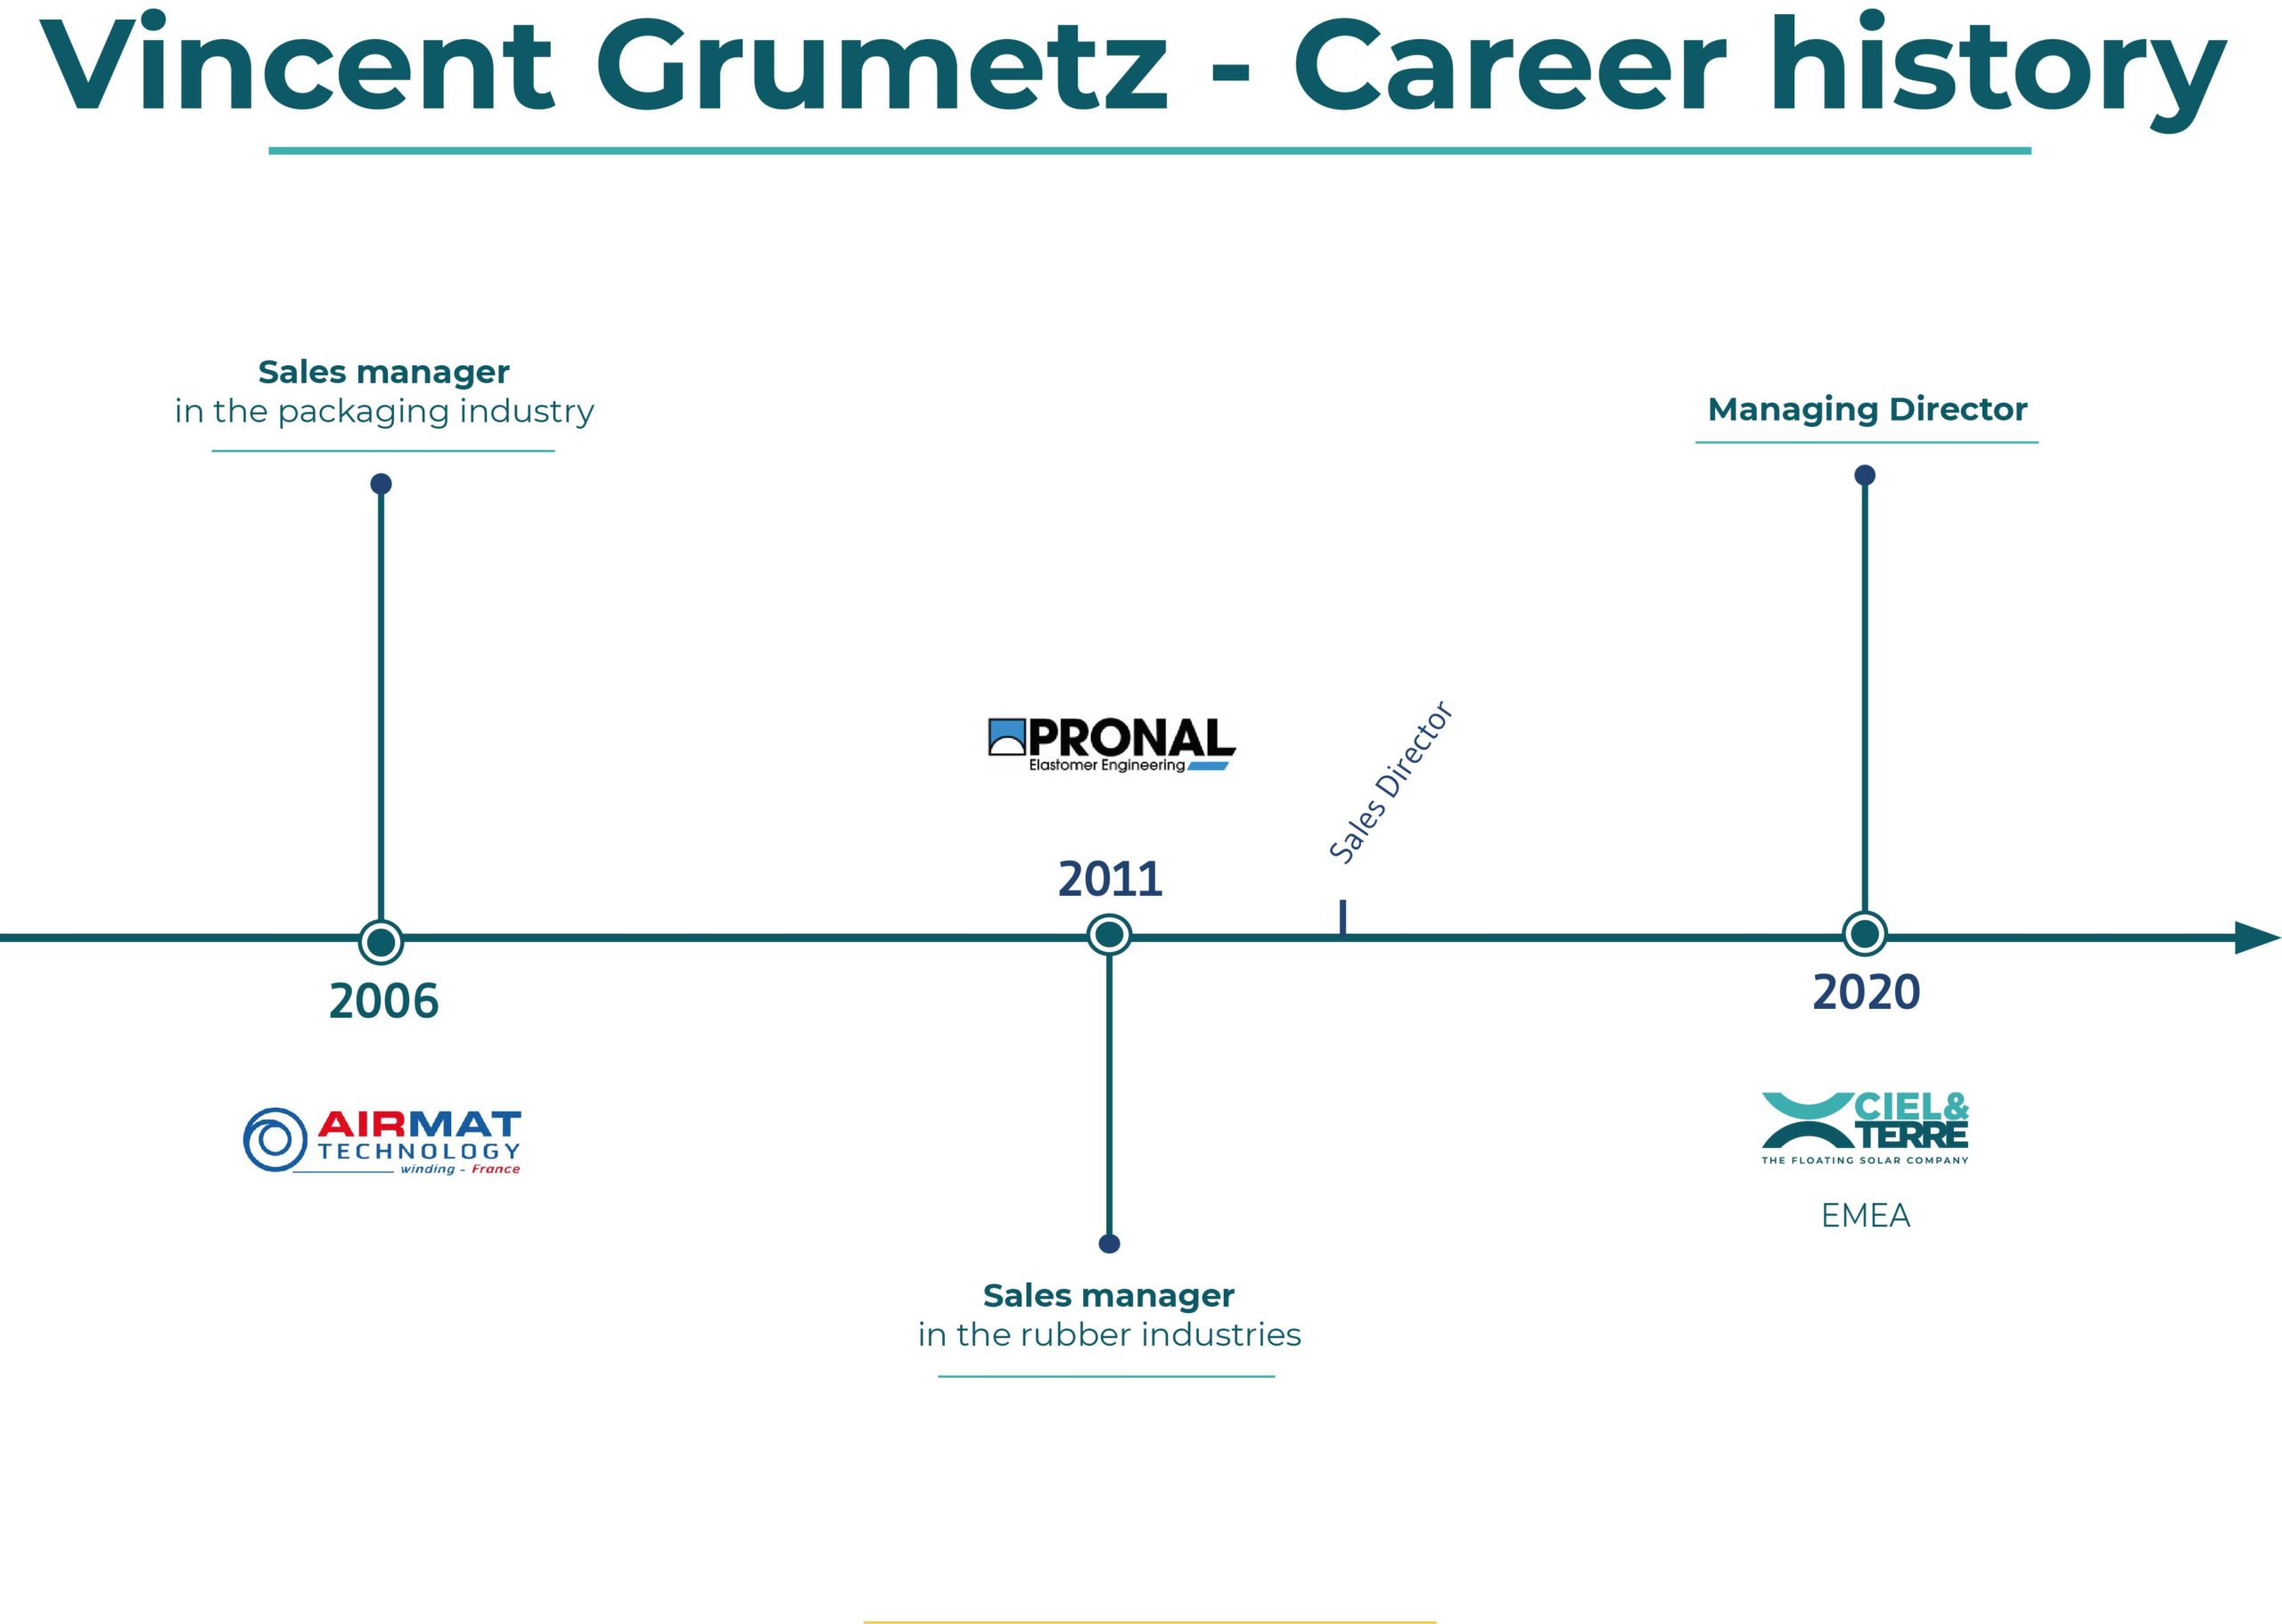 Vincent Grumetz managing director of Ciel et Terre EMEA career history